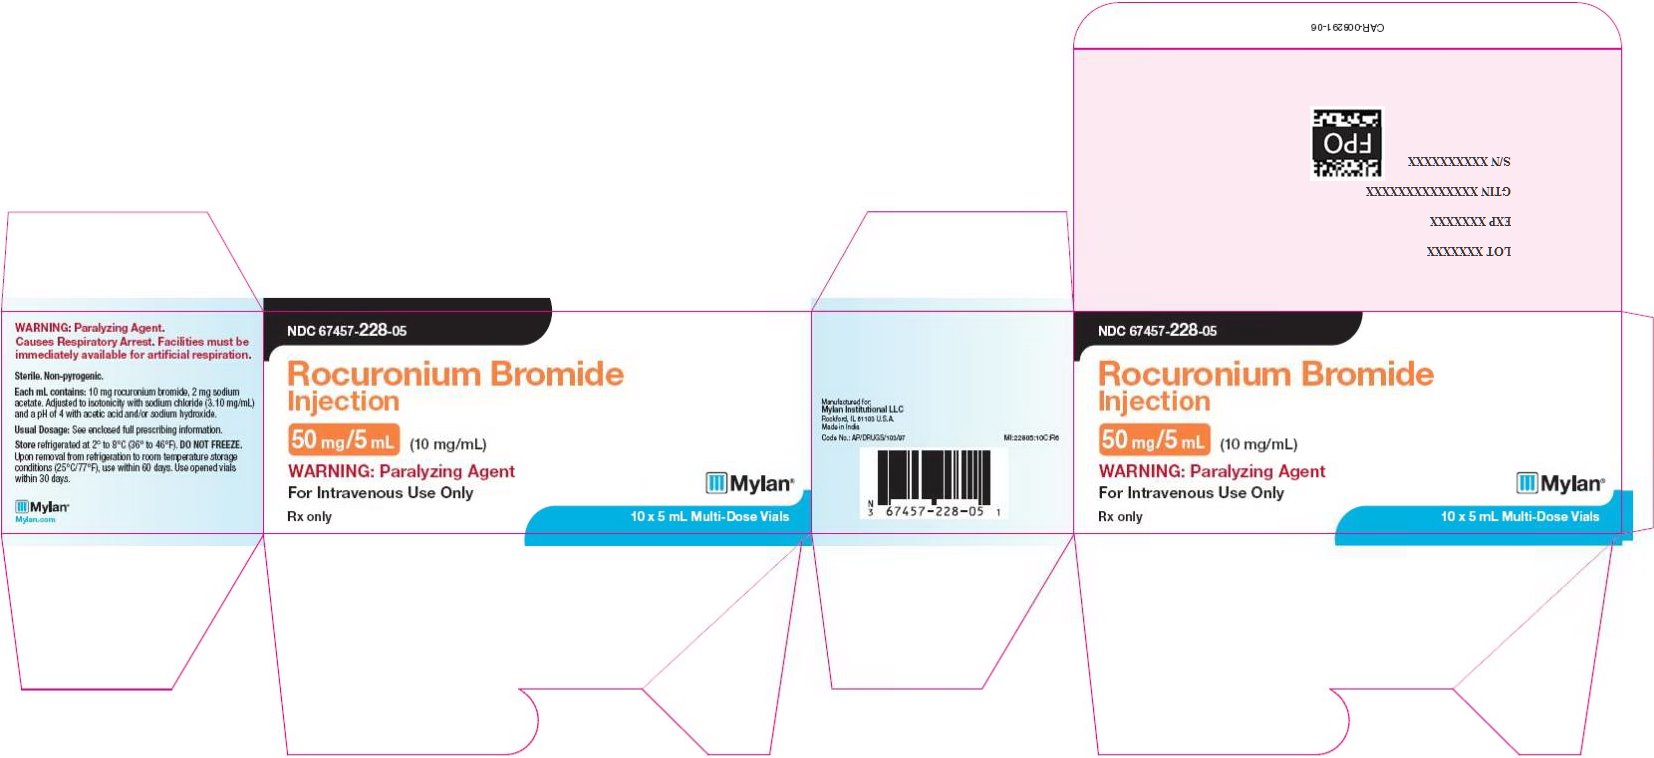 Rocuronium Bromide Injection 50 mg/5 mL Carton Label